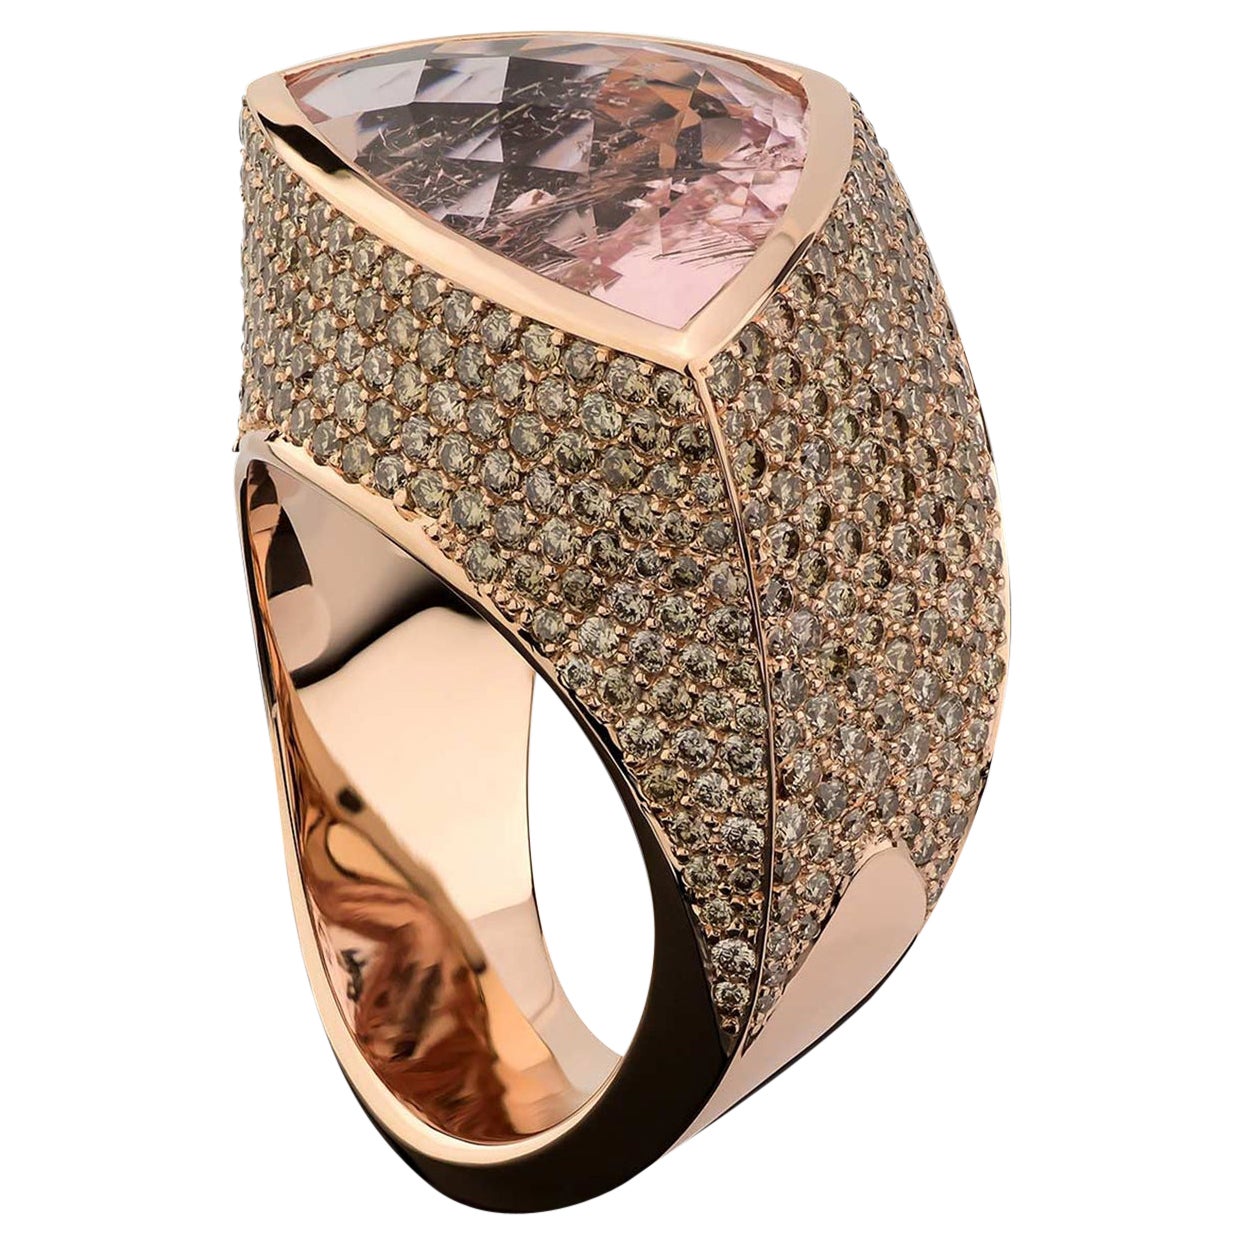 Morganite cocktail ring ca 10.37 ct, 18K rose gold, 419 hand set diamonds For Sale